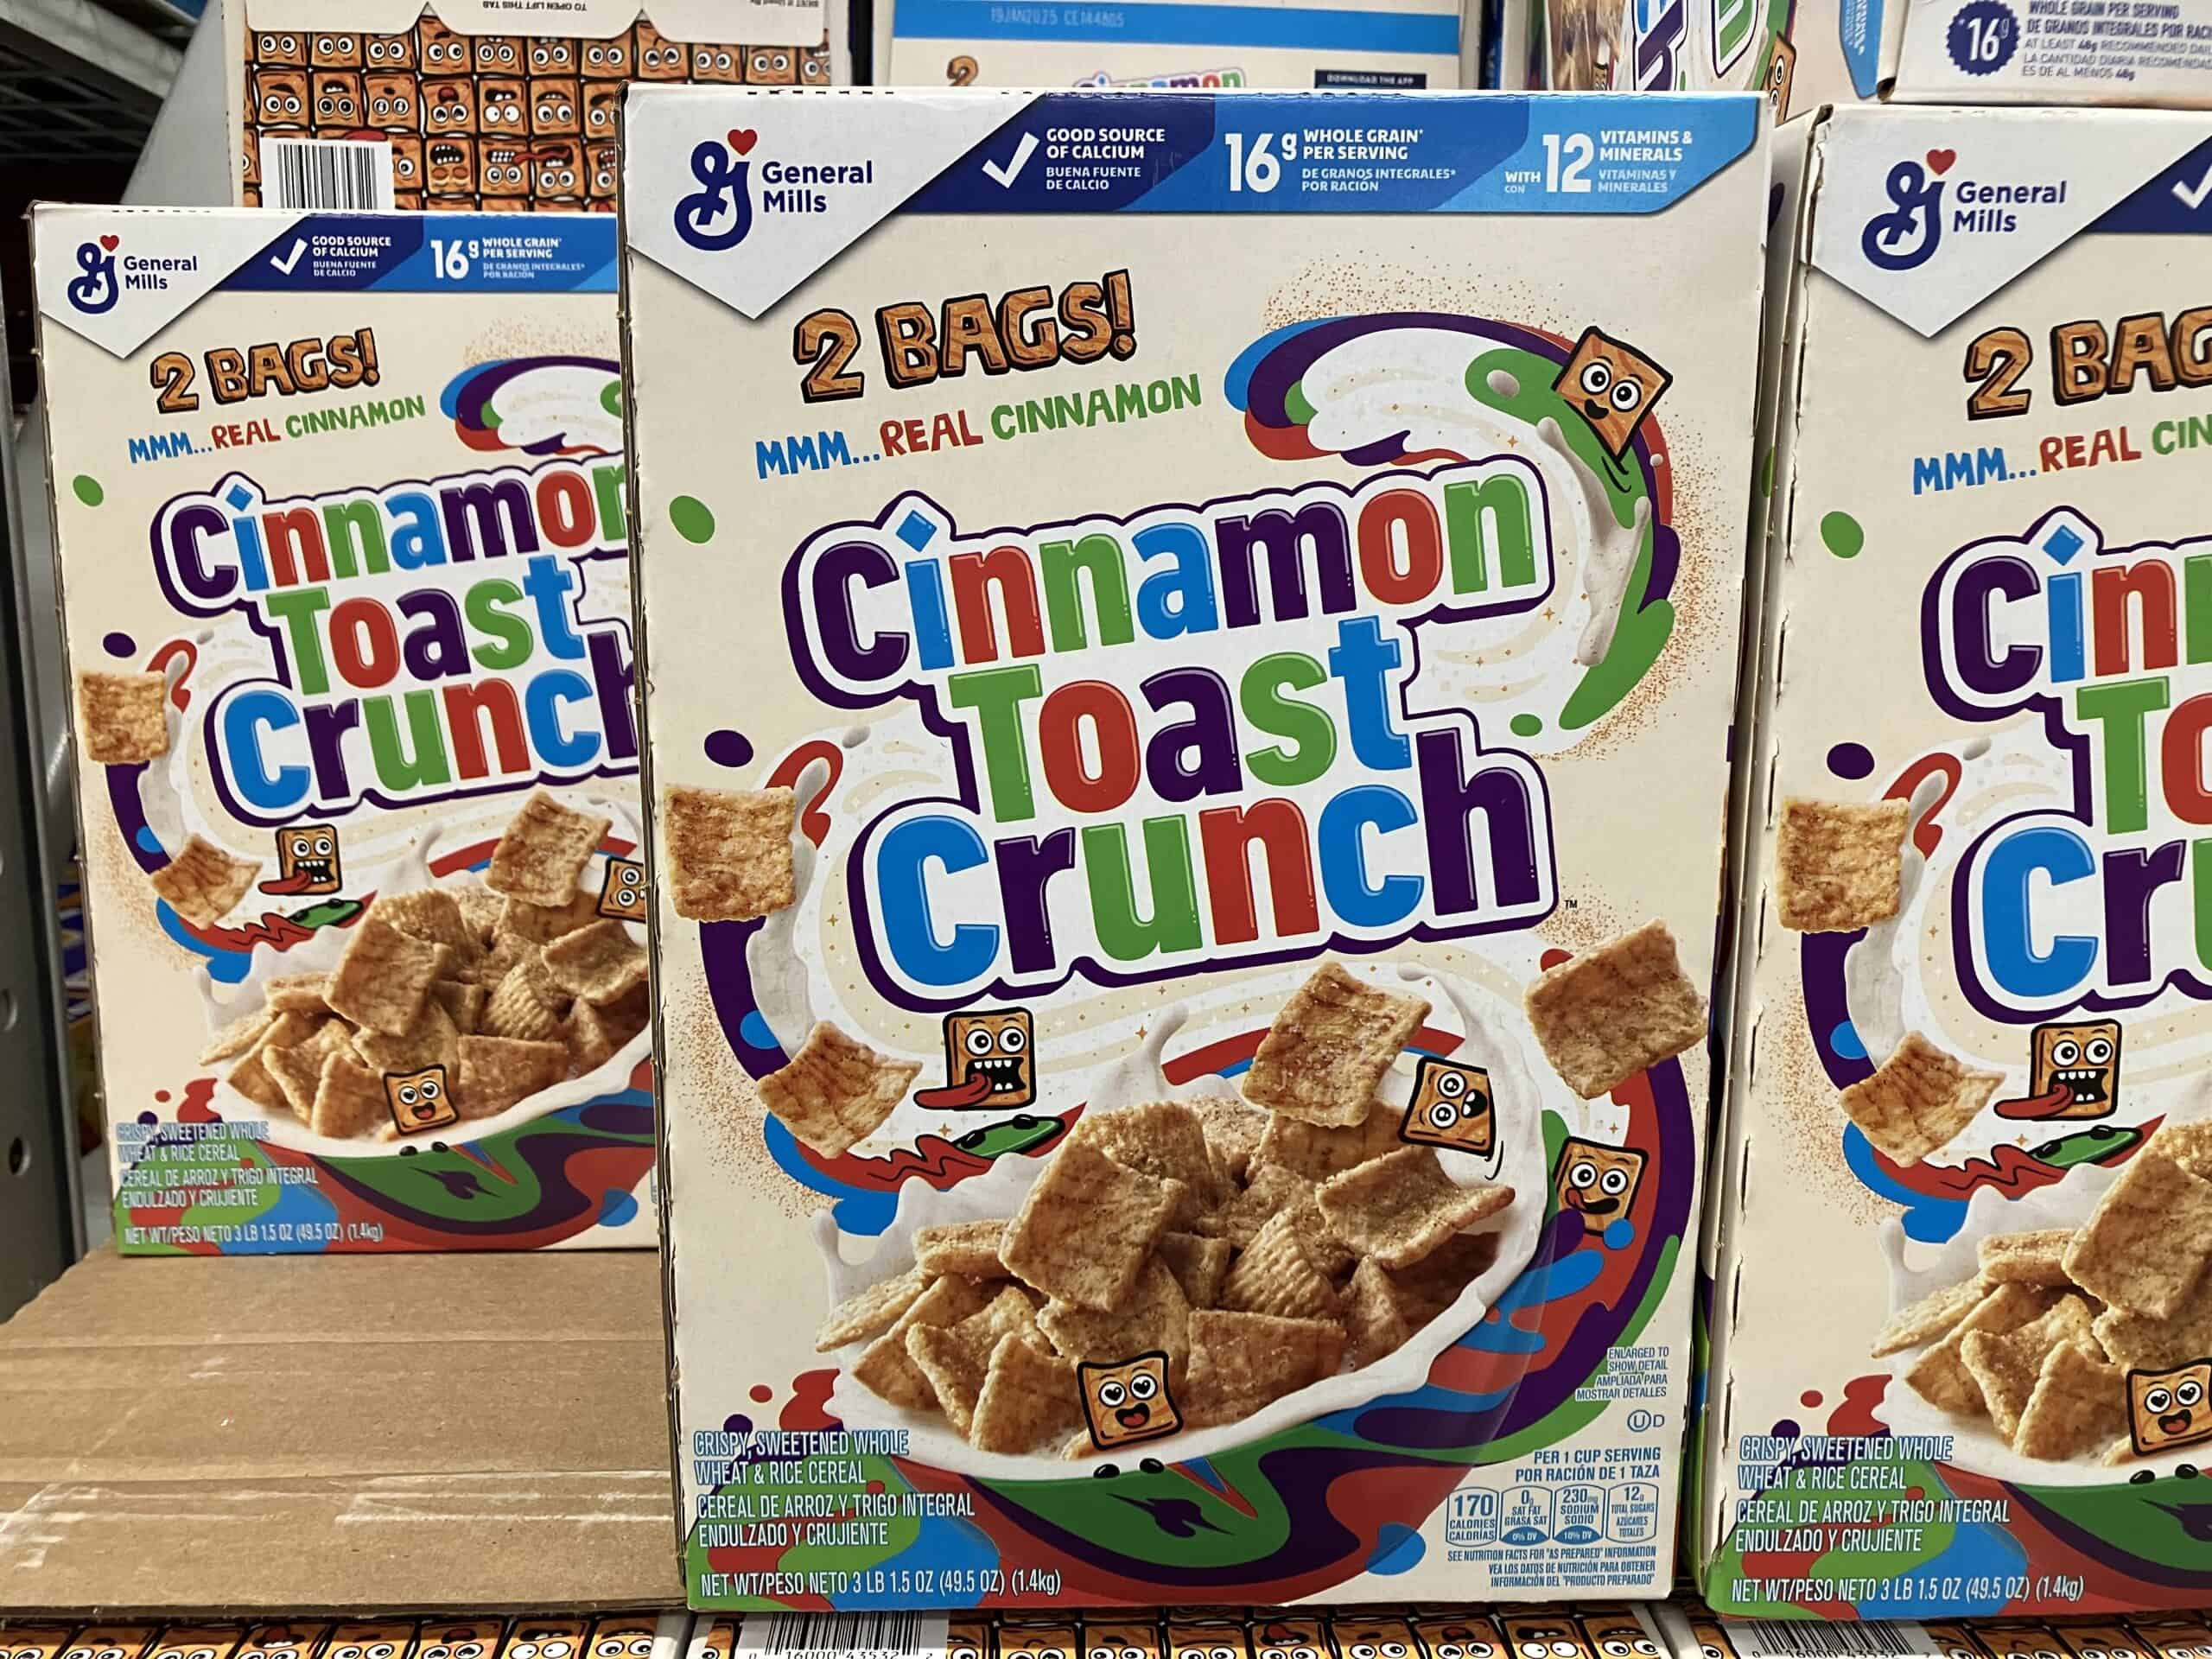 Cinnamon Toast Crunch cereal